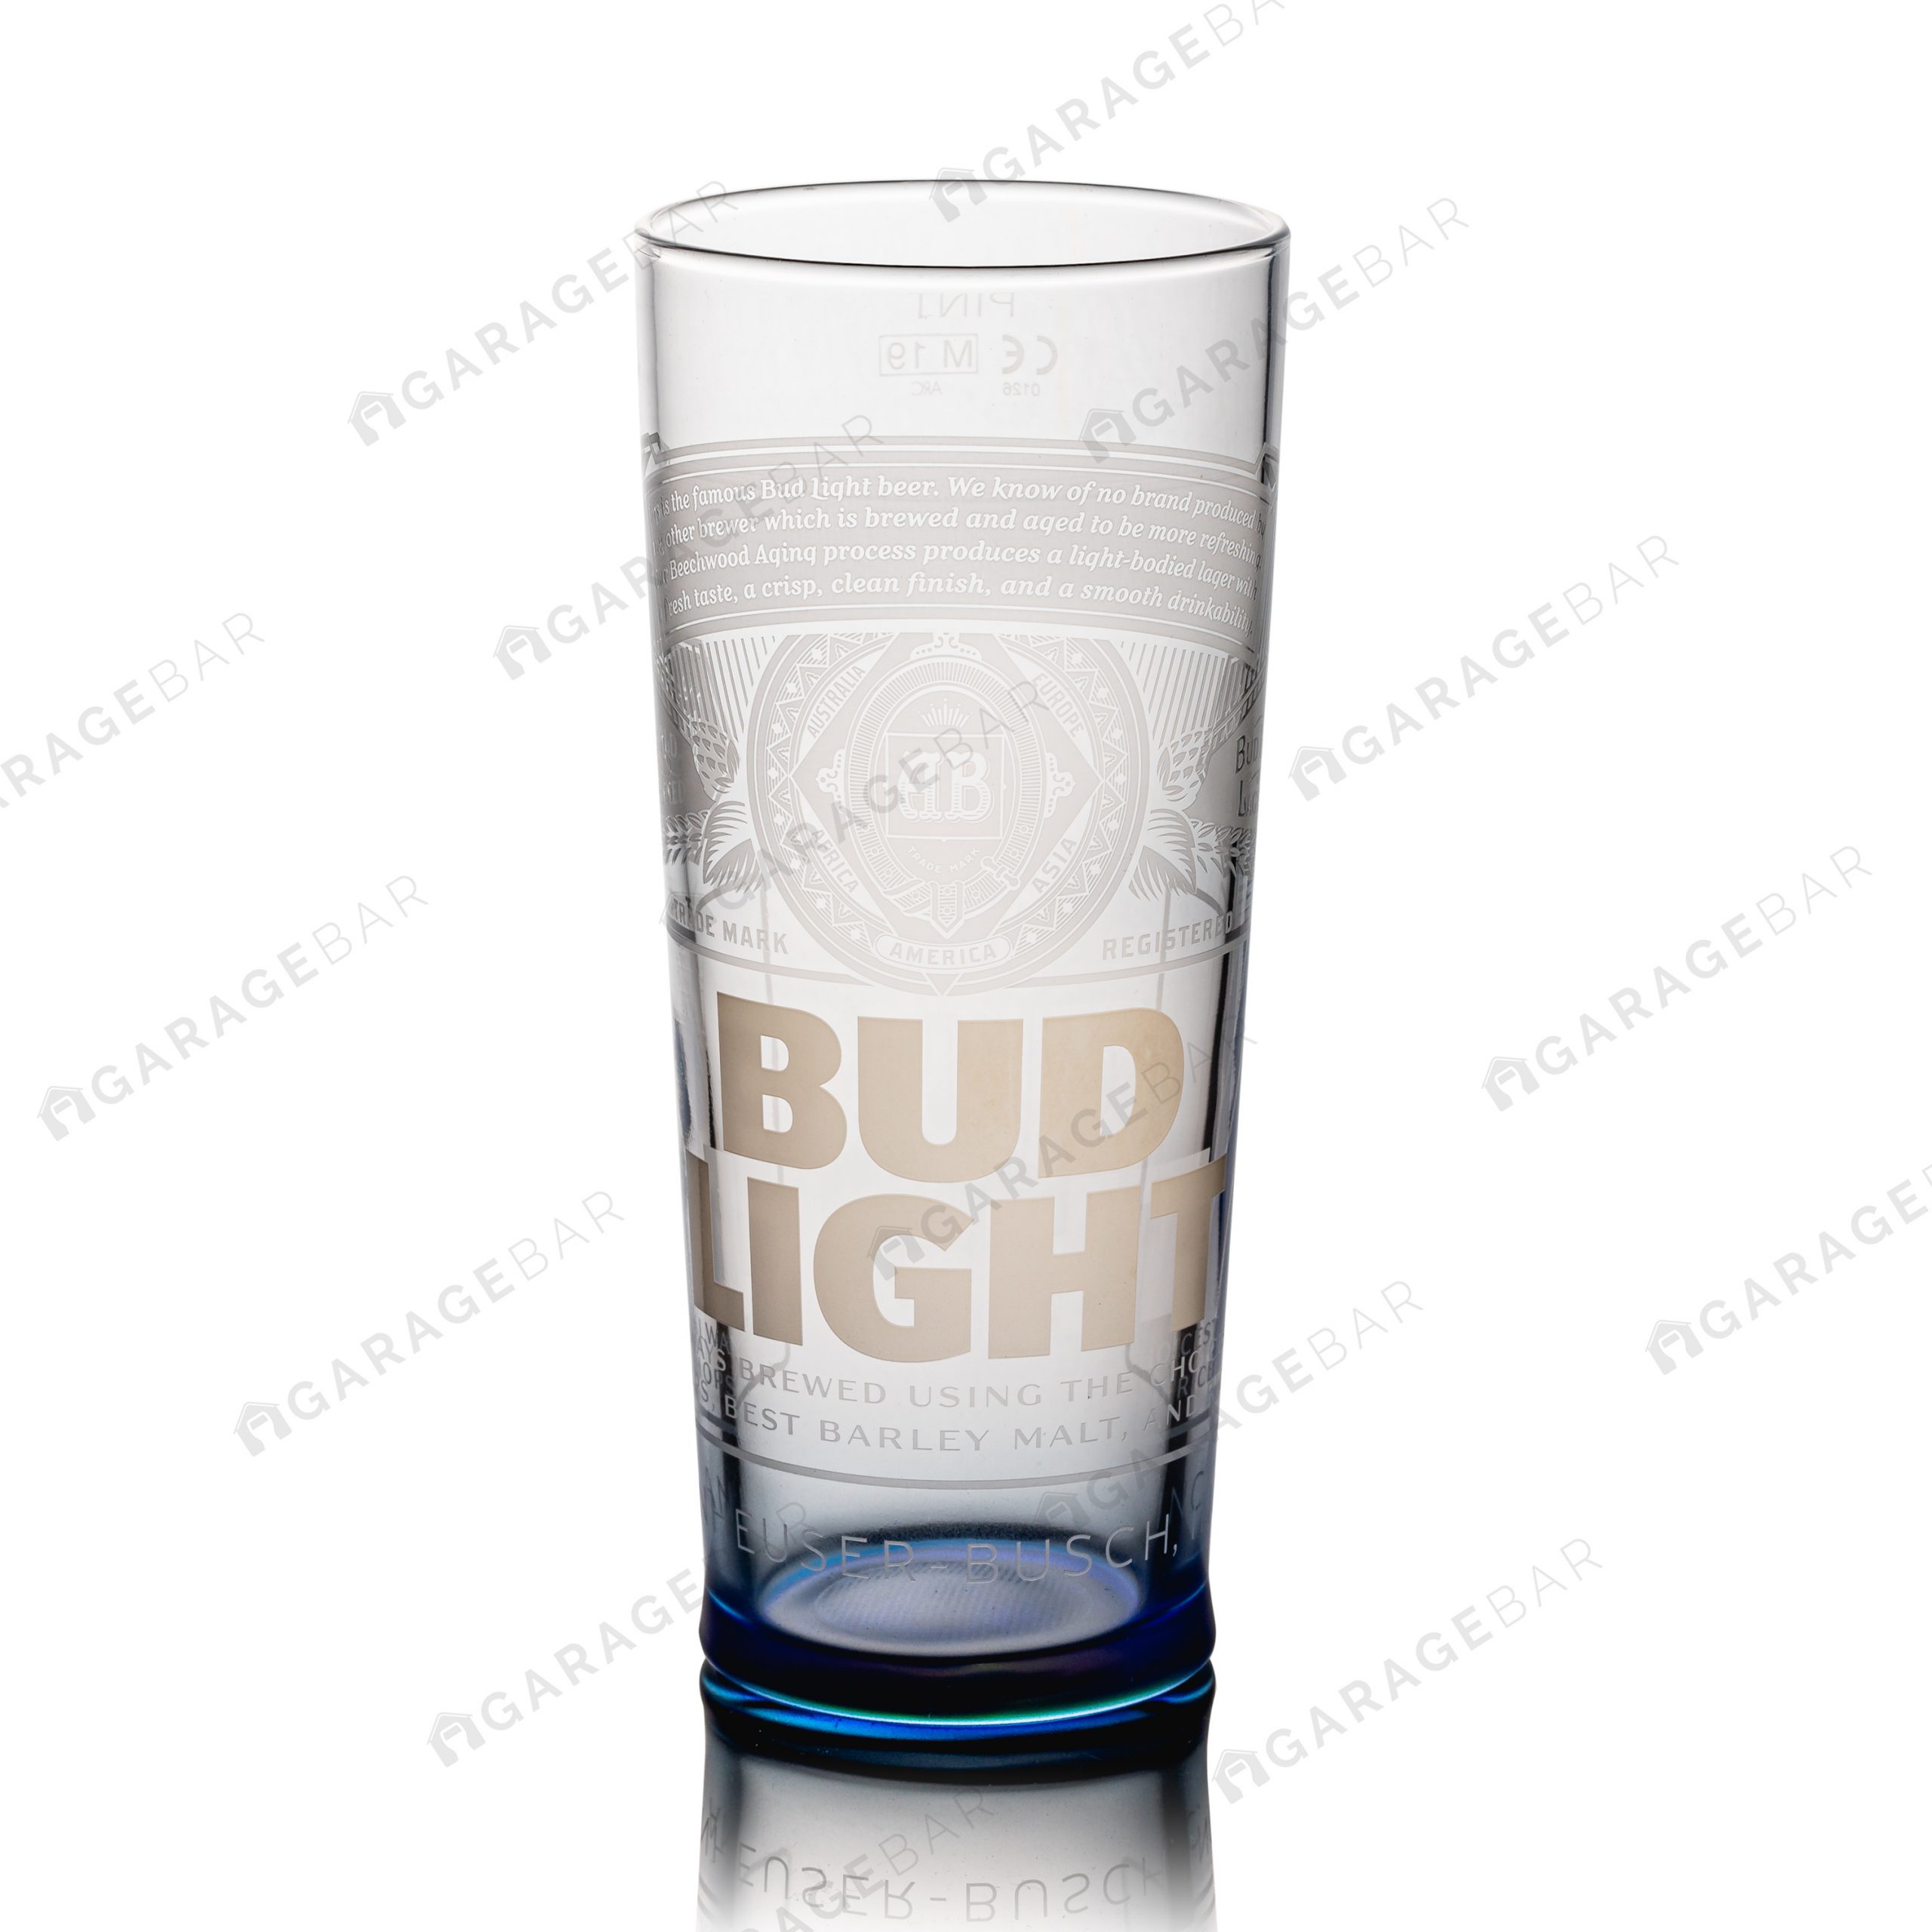 bud light glass